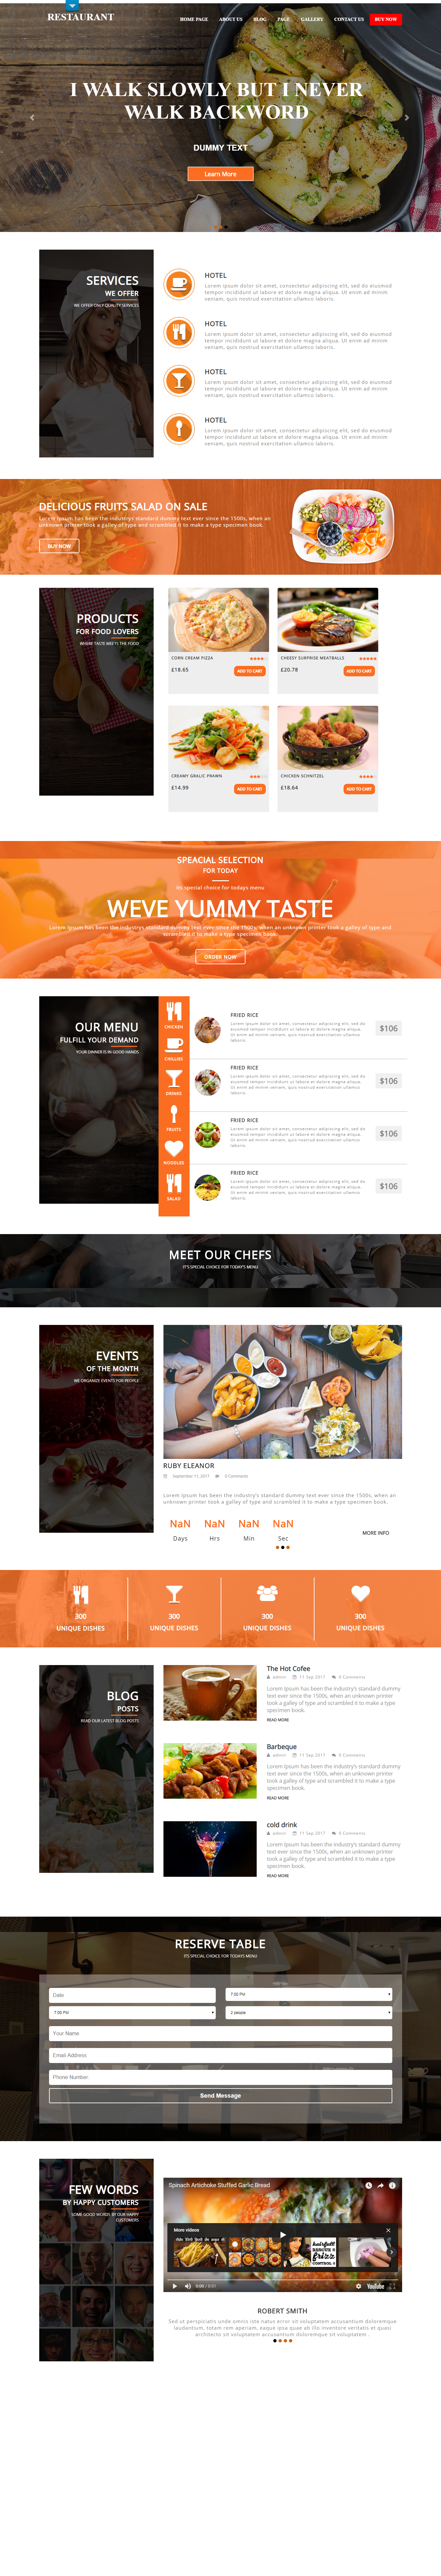 Gourmet Restaurant - Los mejores temas gratuitos de WordPress para restaurantes